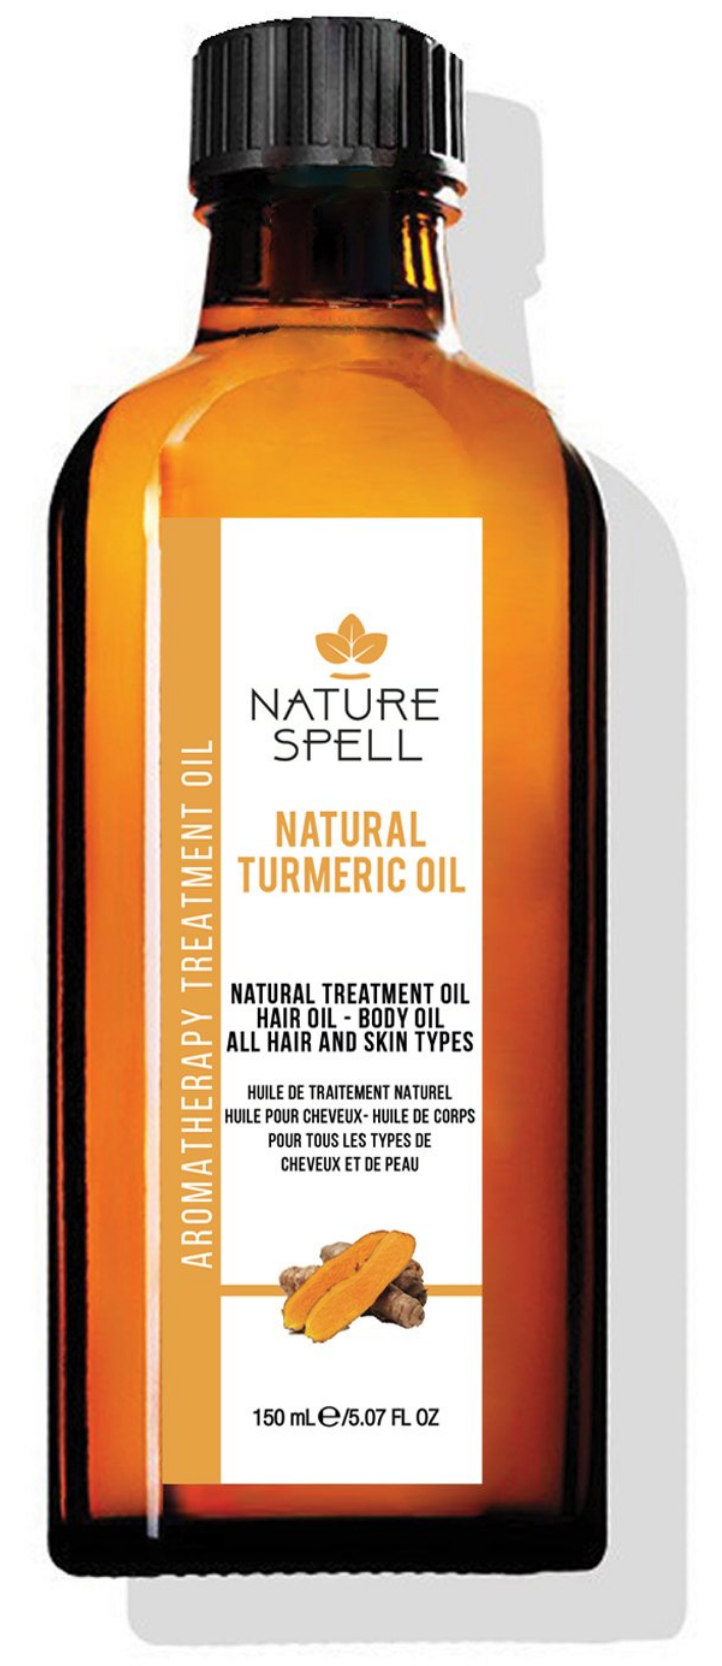 Nature Spell - Natural Turmeric Oil,150 ML